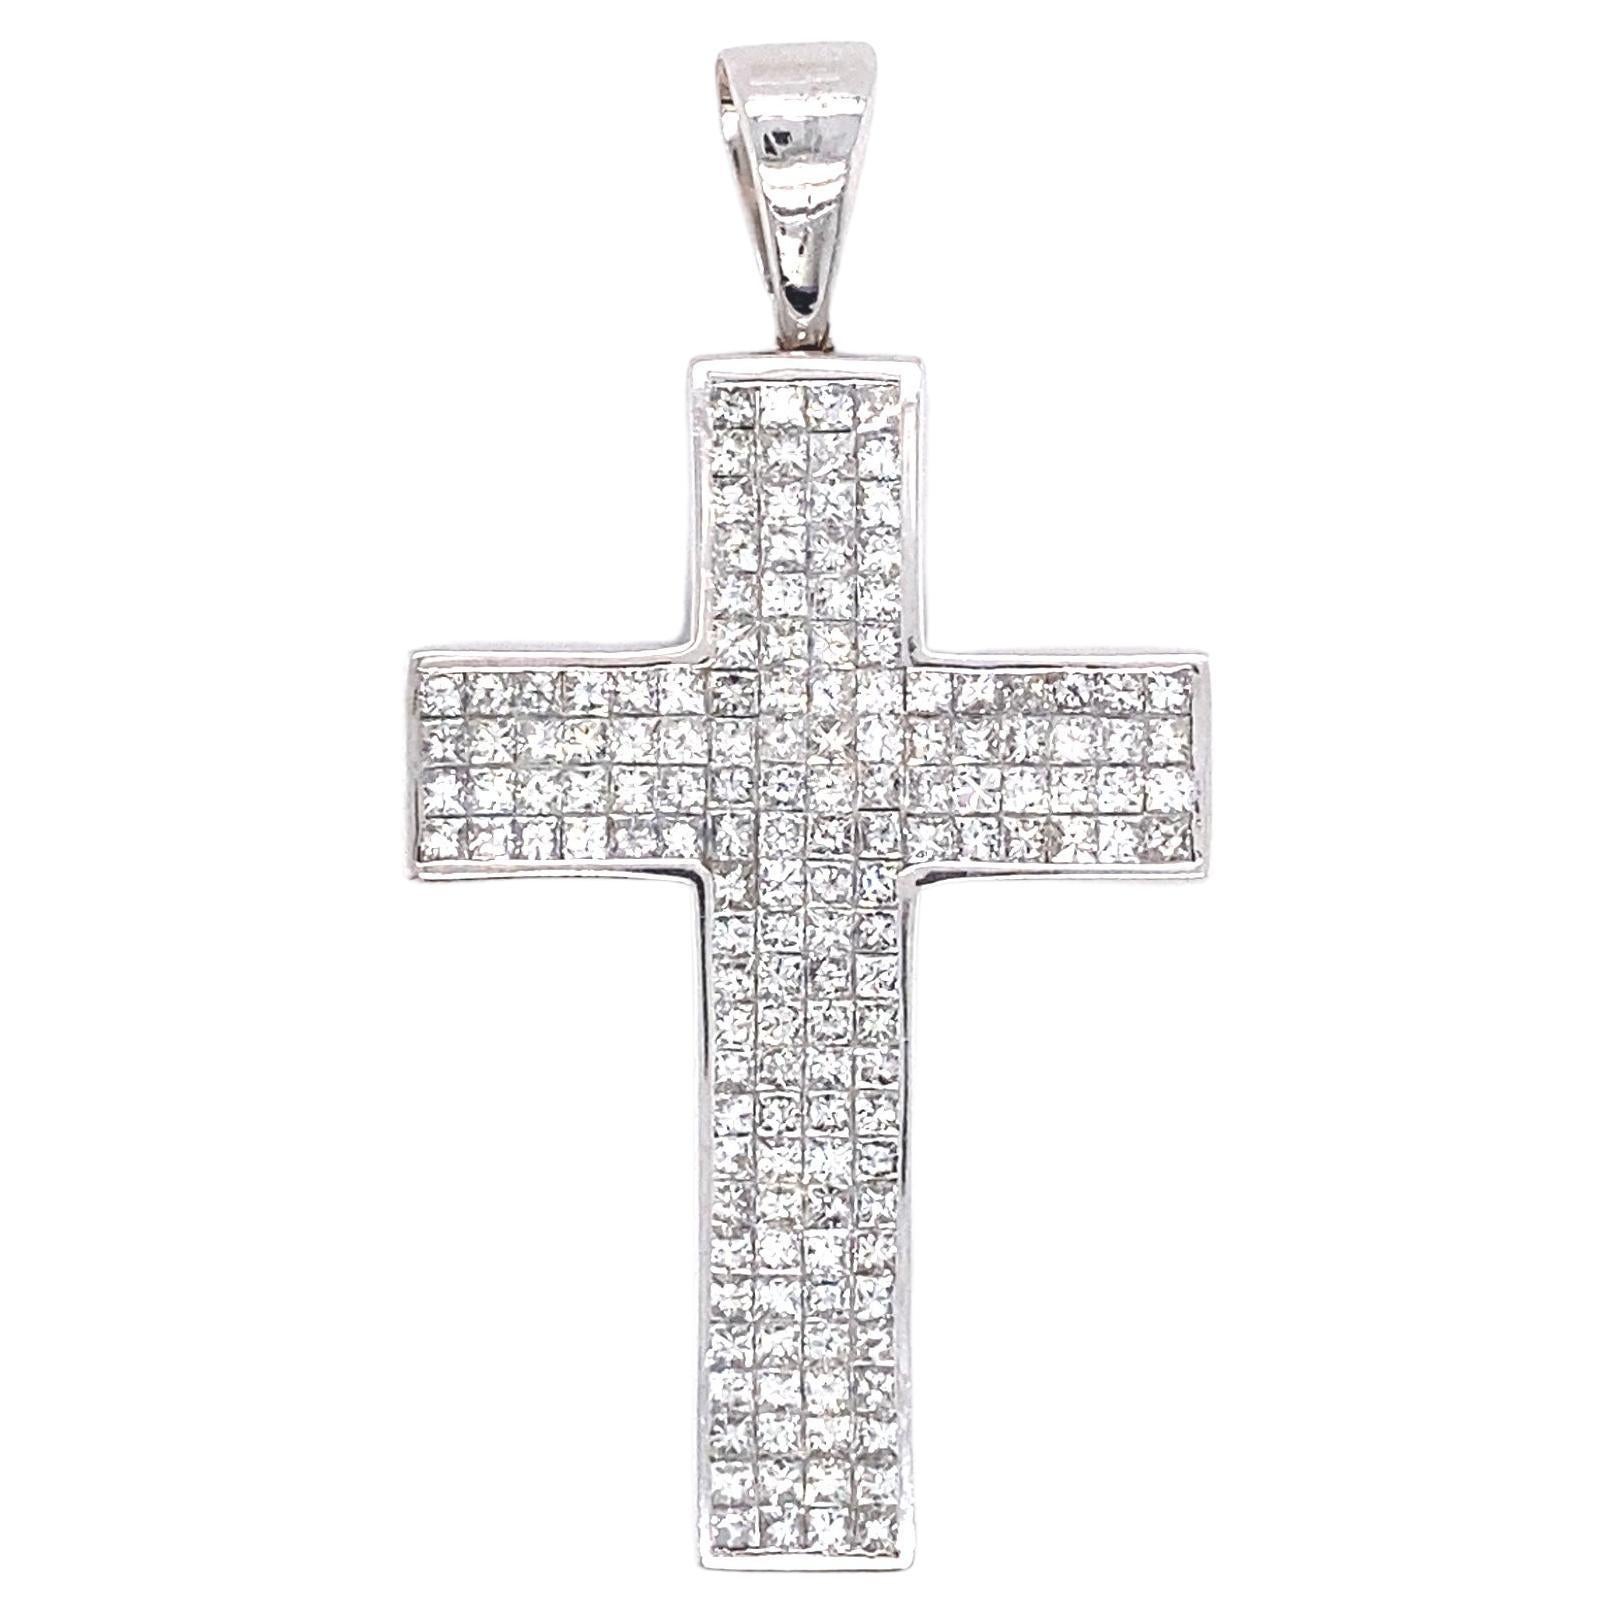 5 Carat Diamond Cross Pendant in 18 Karat White Gold For Sale